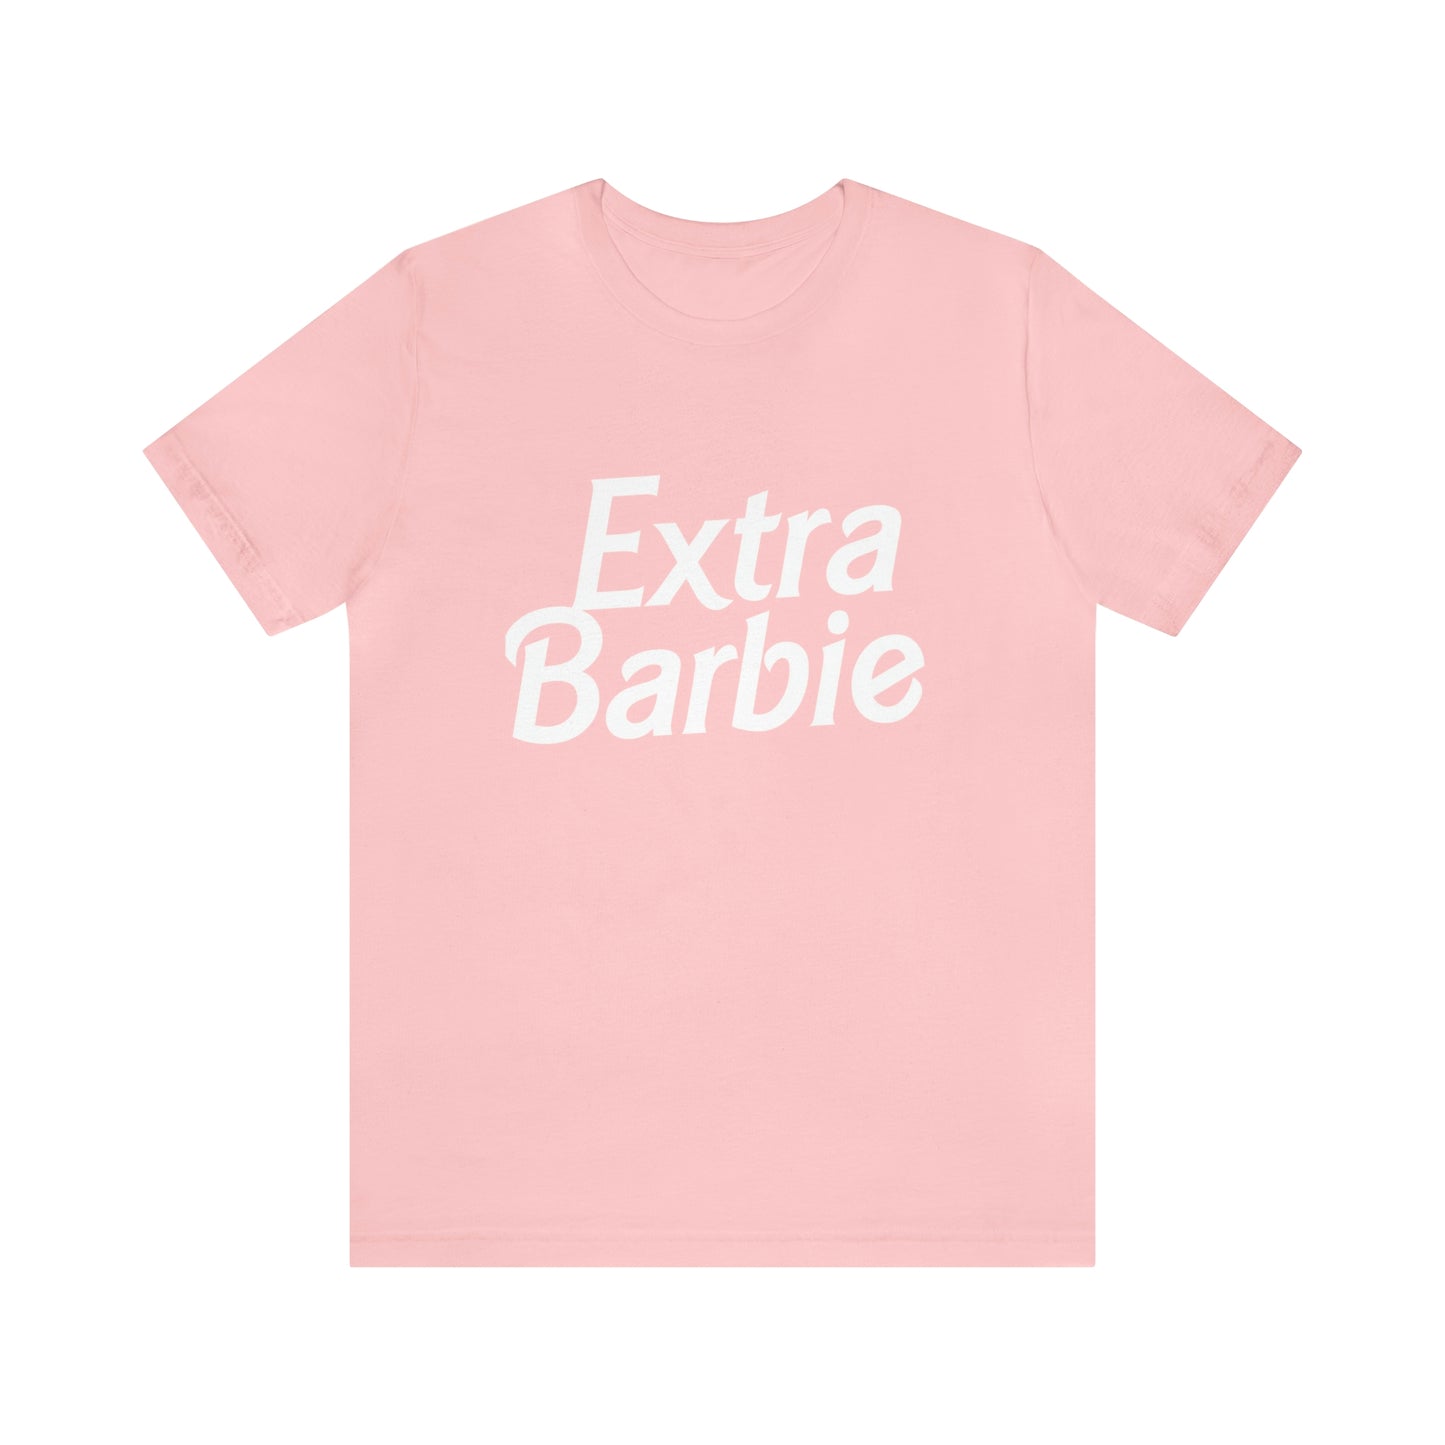 Extra Barbie